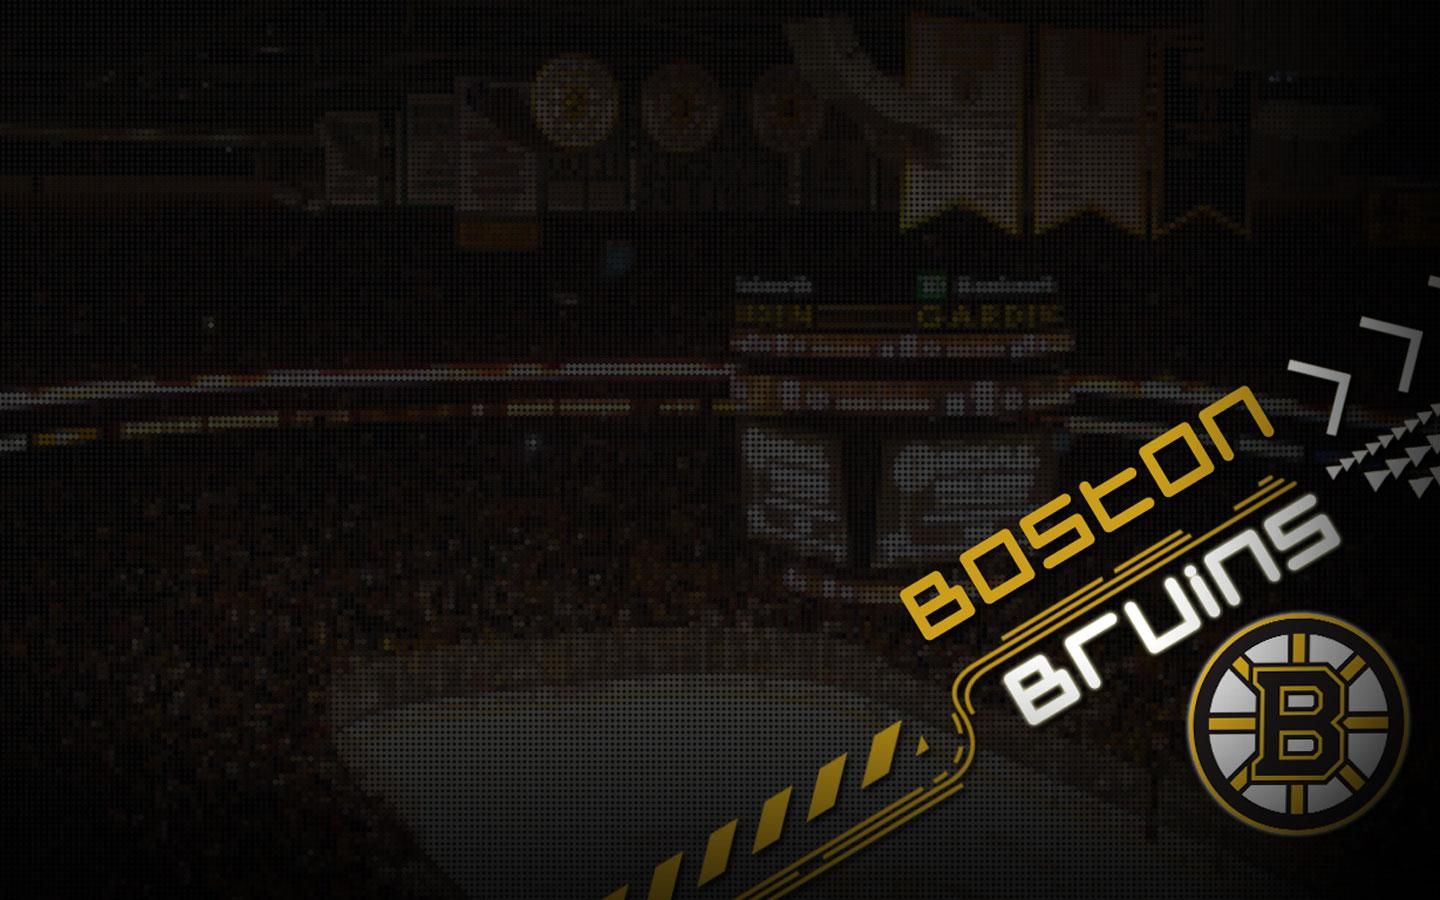 Download Boston Bruins Wallpapers HD Wallpapers Range